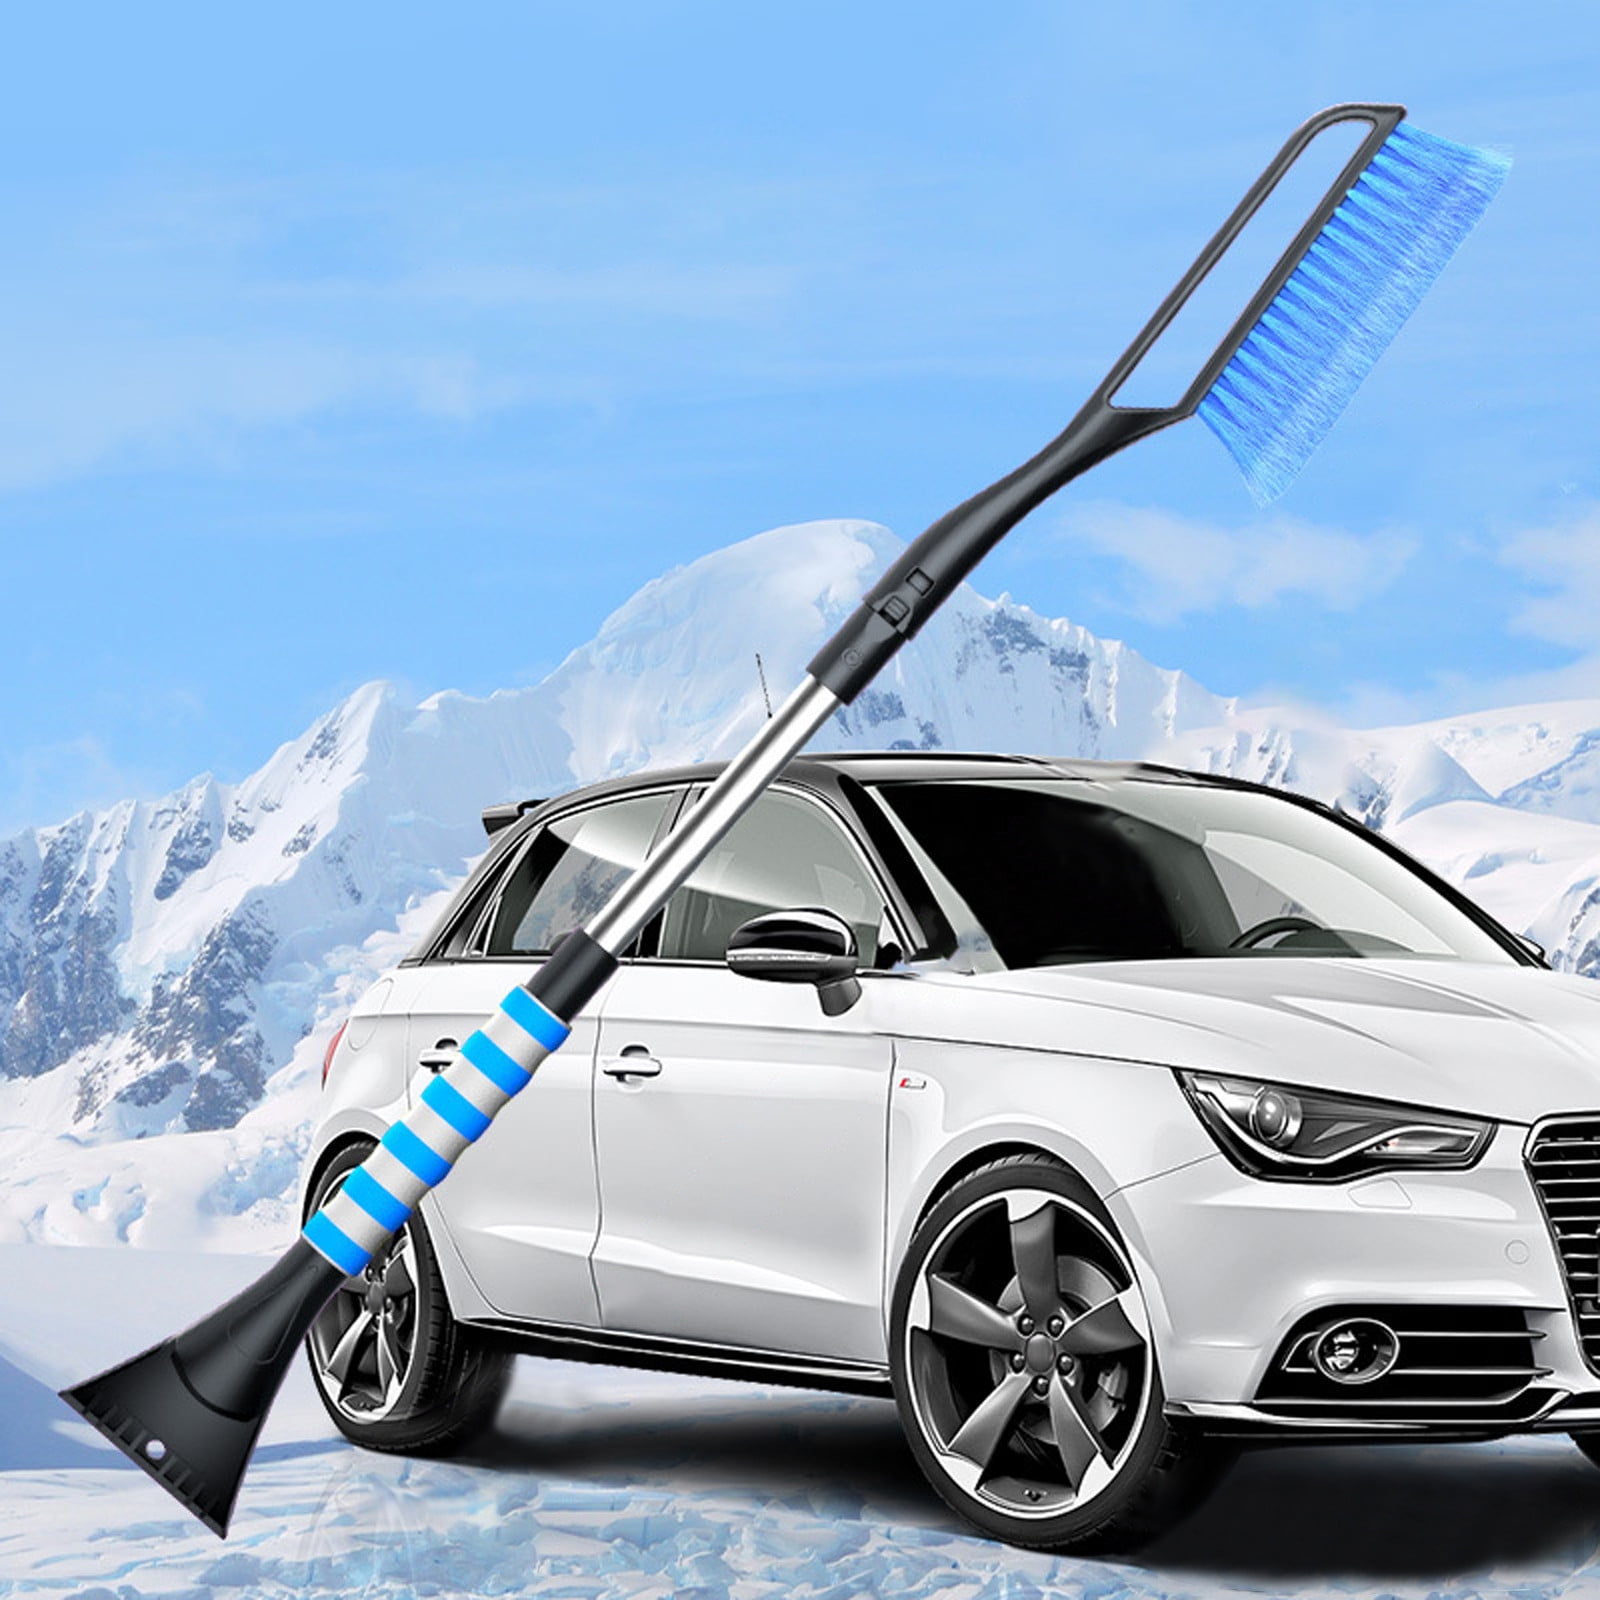 Genuine Audi Ice Scraper with Snow Brush and Telescoping Handle